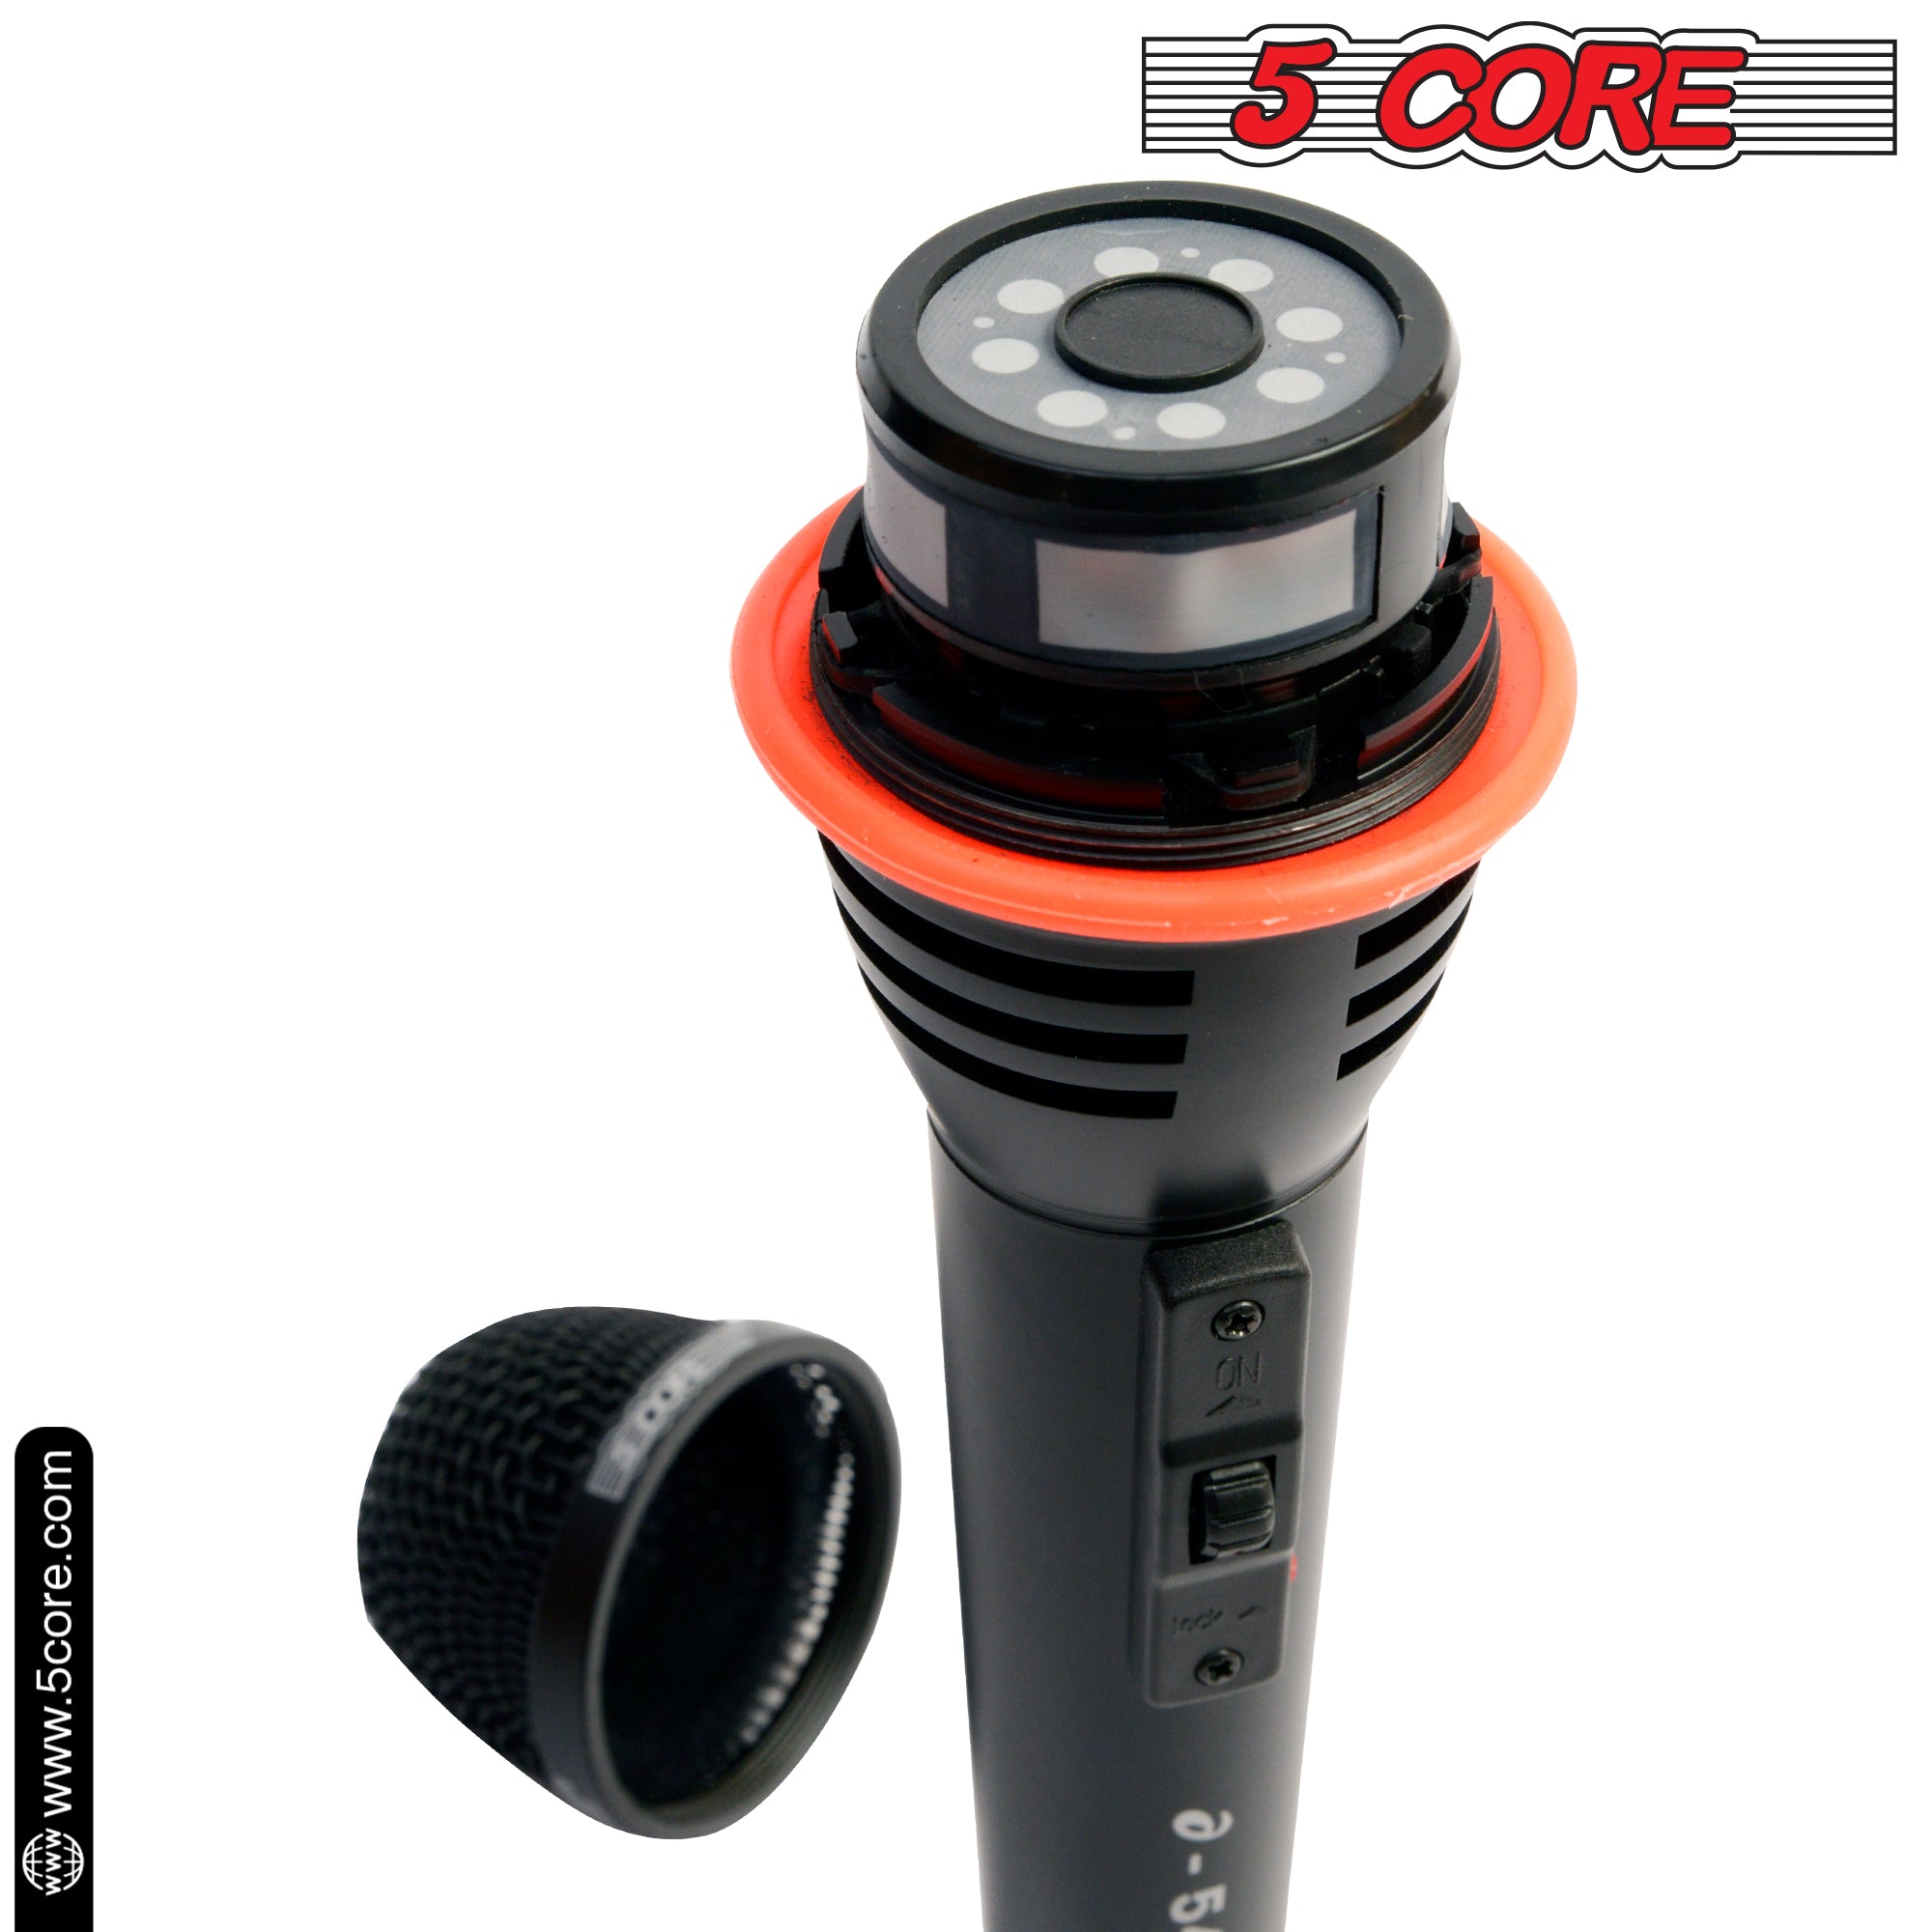 Karaoke Essential: A-54 Microphone for Singing